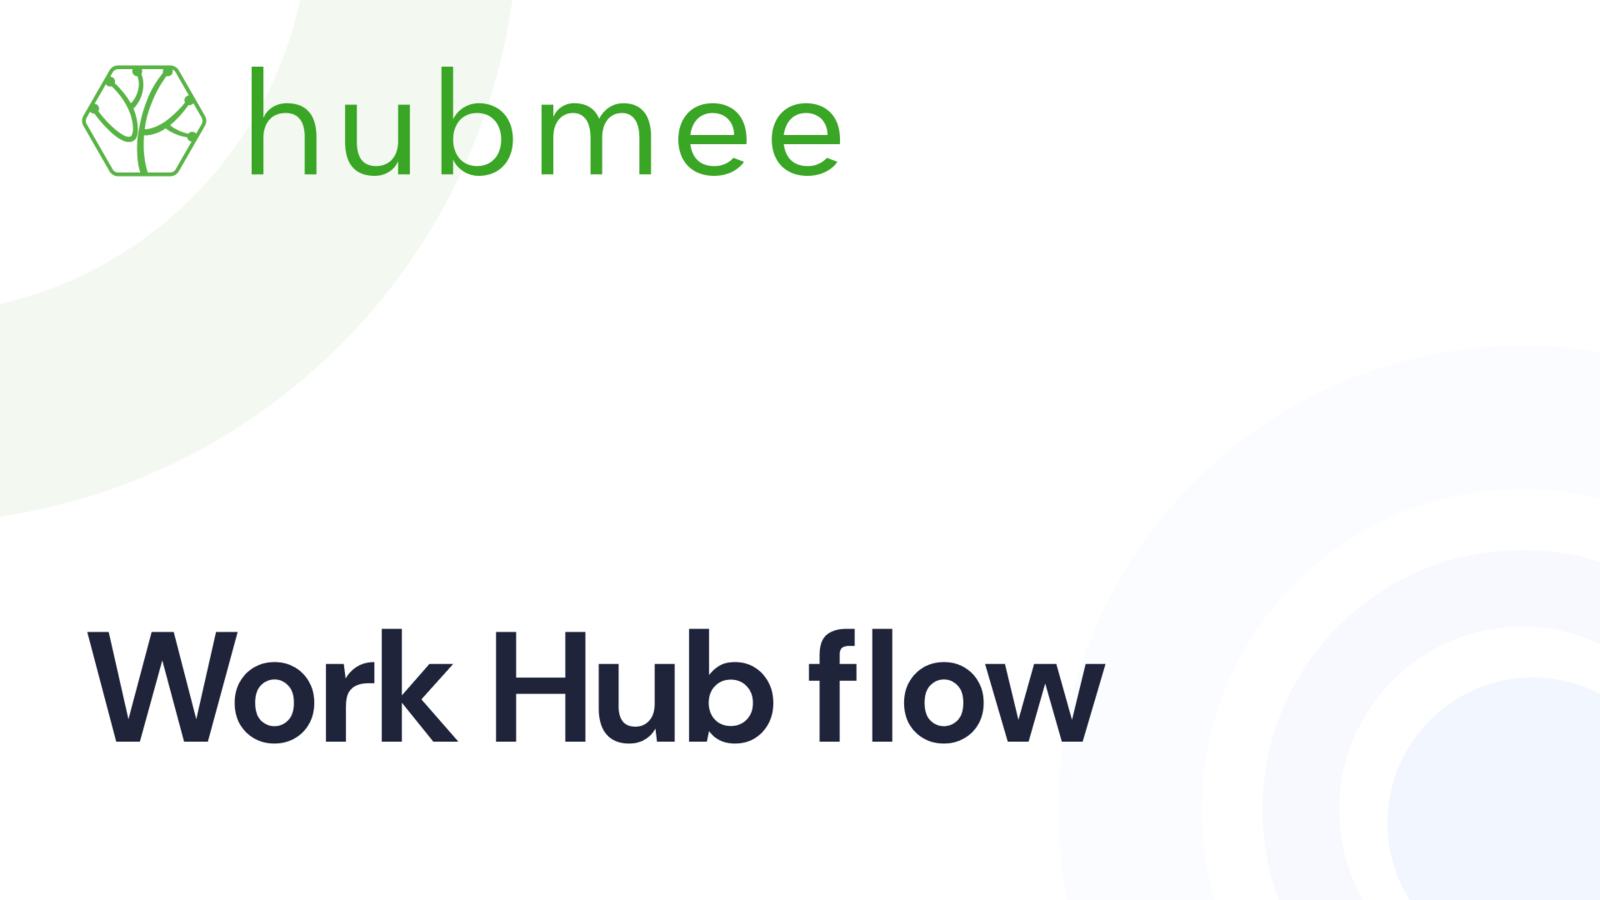 Work Hub flow